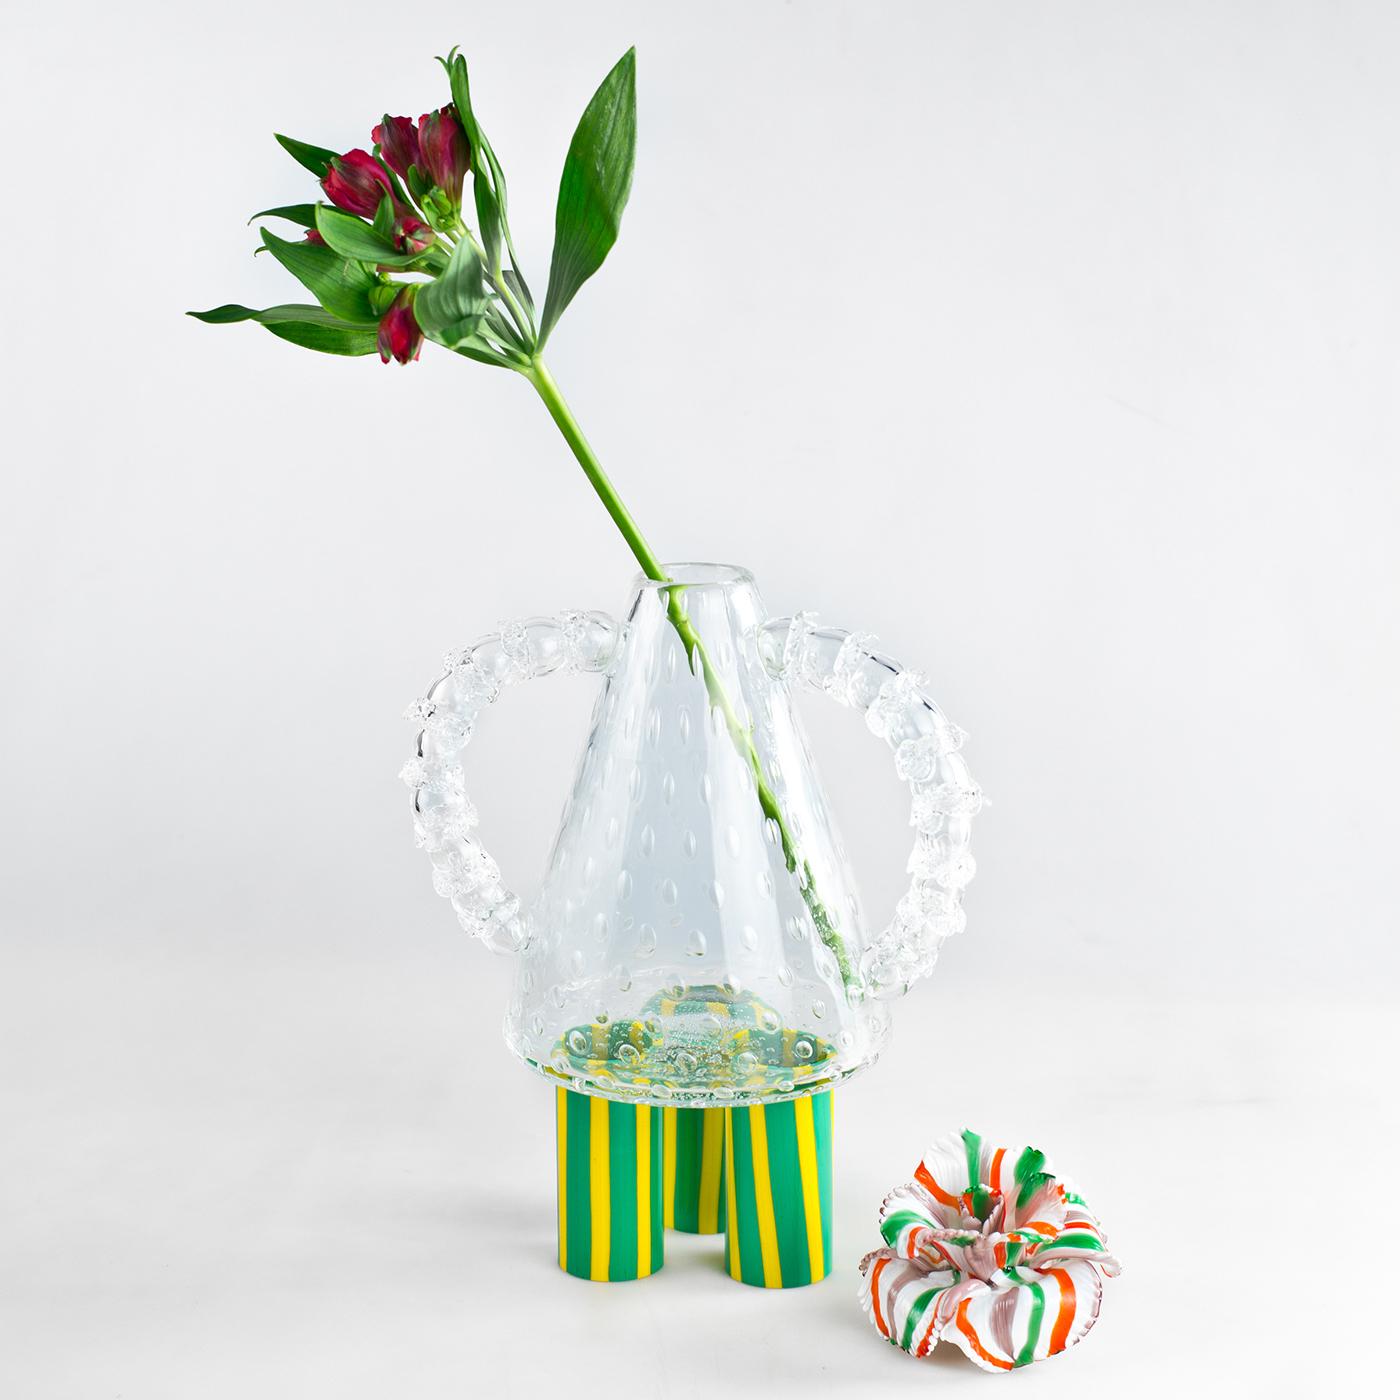 Contemporary Rezzonica Venetian Glass Sculpture by Eliana Gerotto